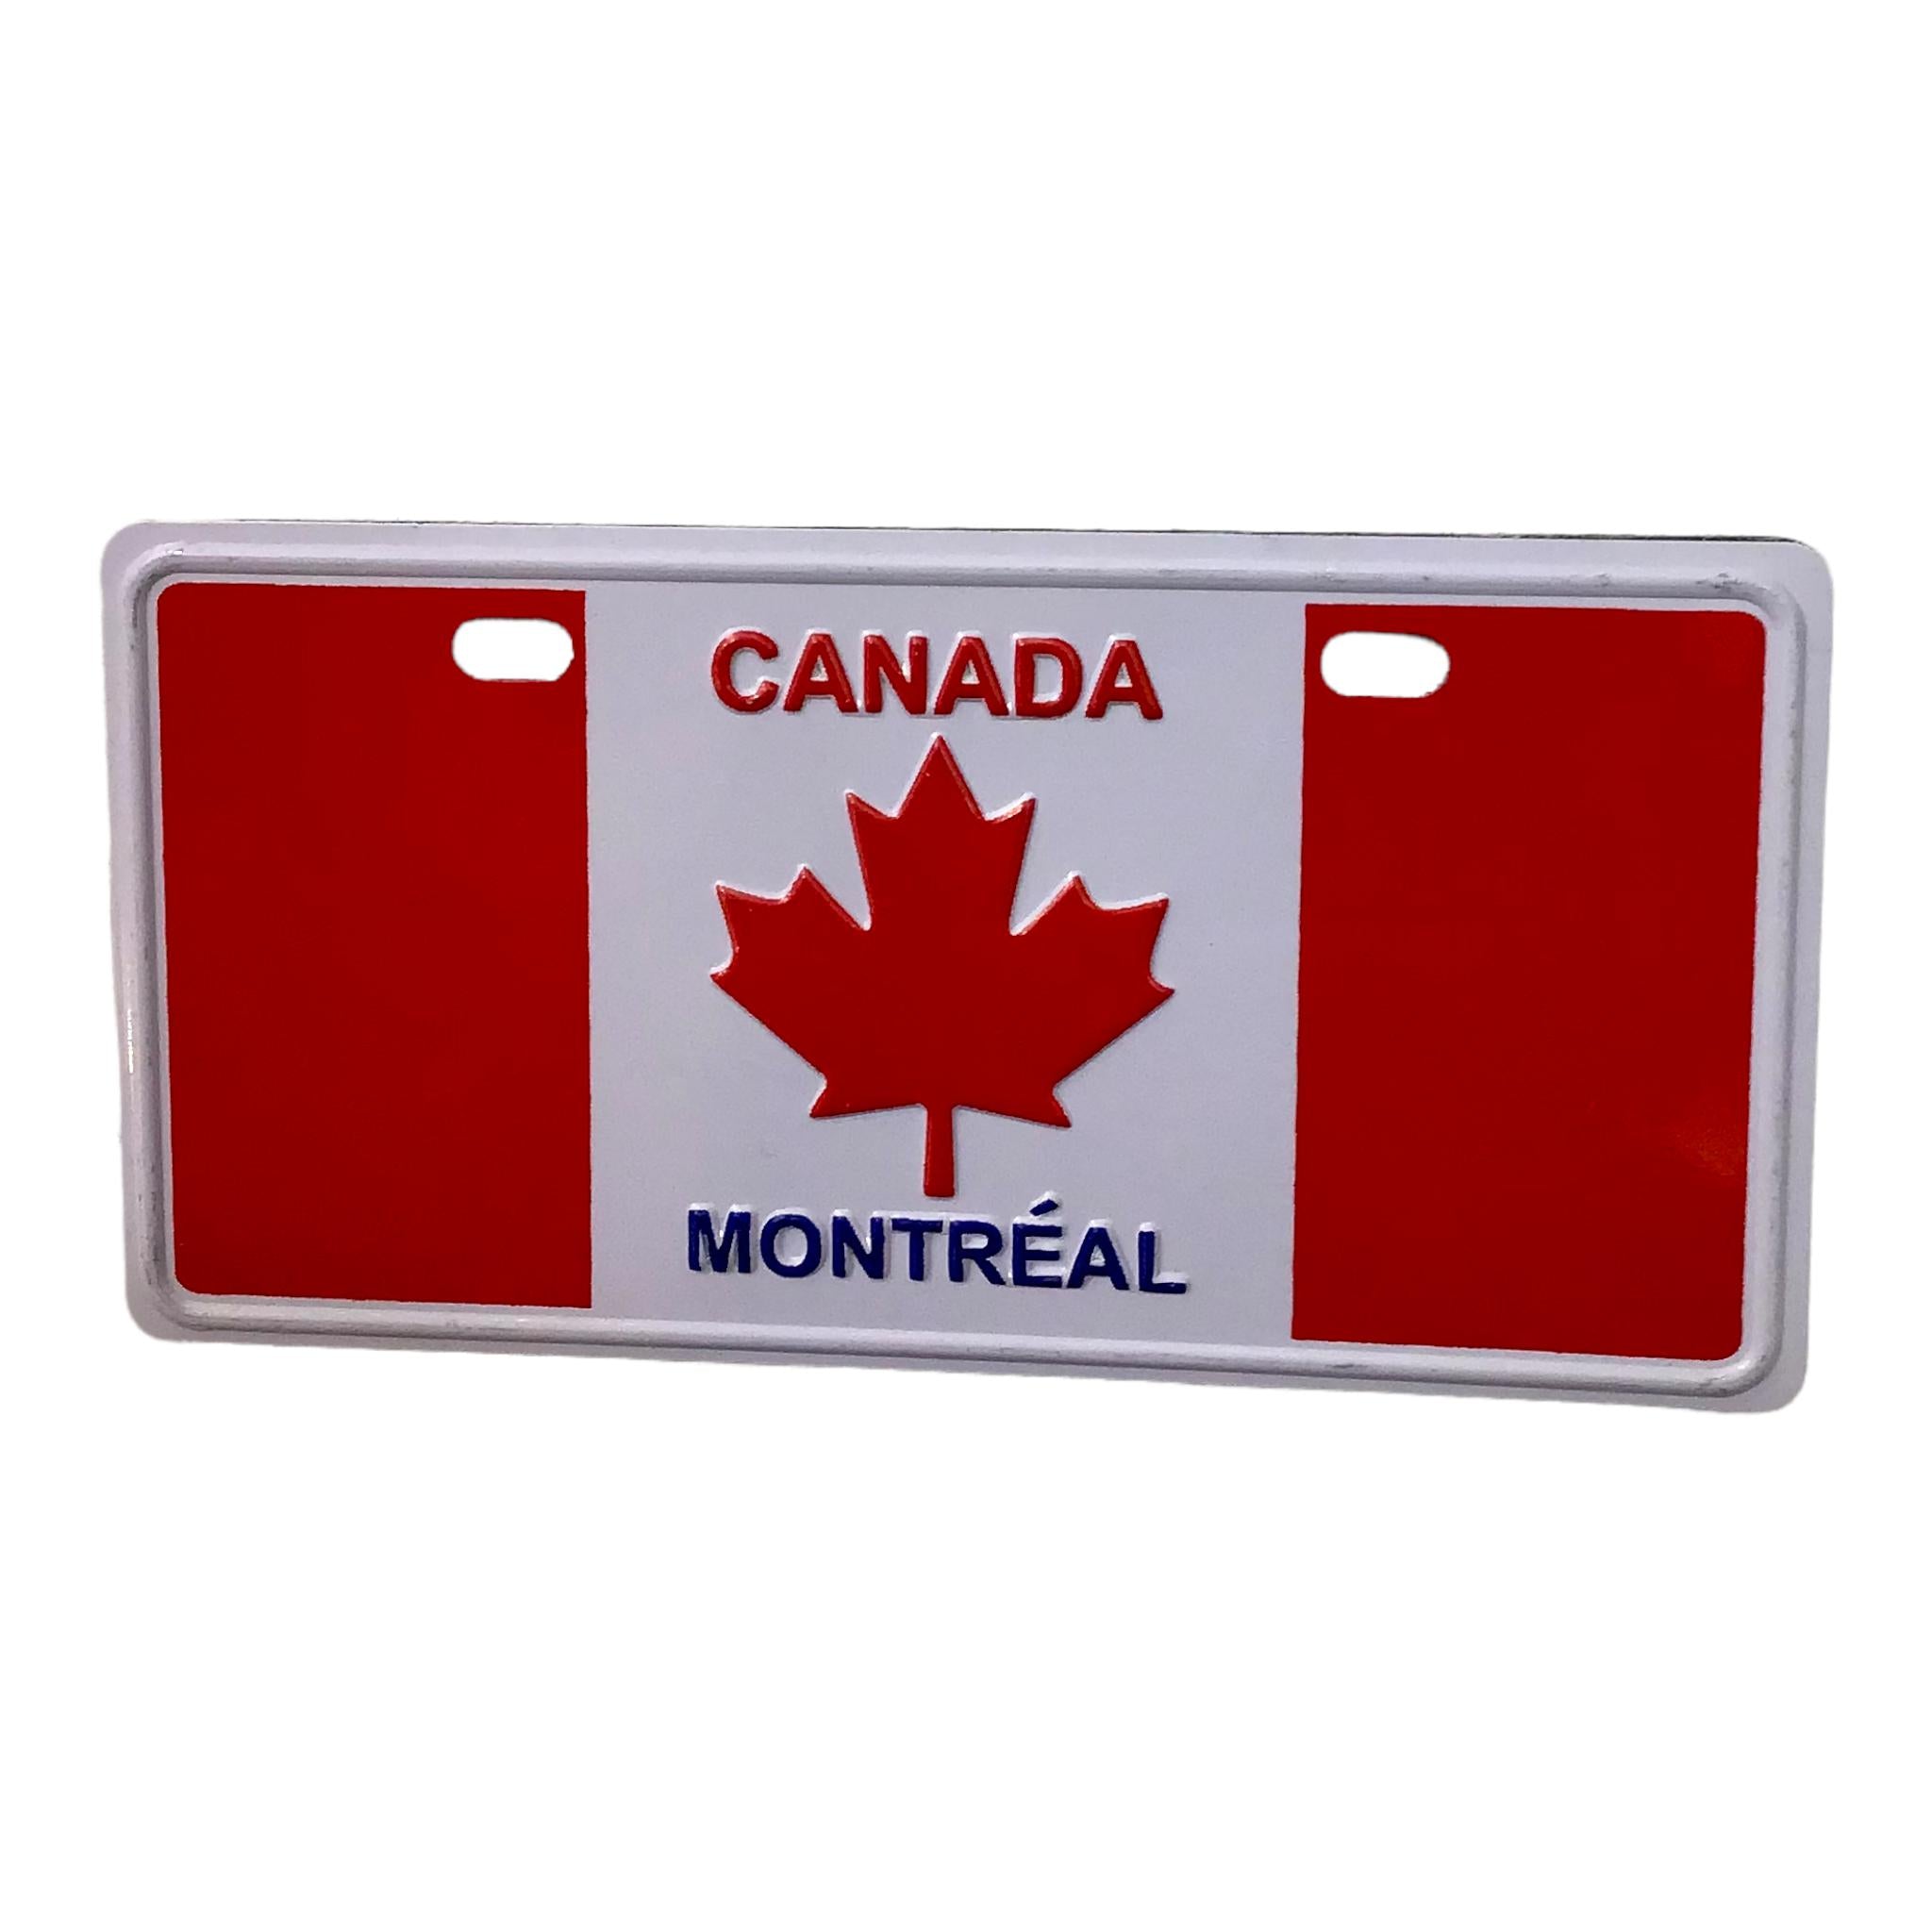 Montreal Fridge Magnet | Canada Flag License Plate Design 4”x2”